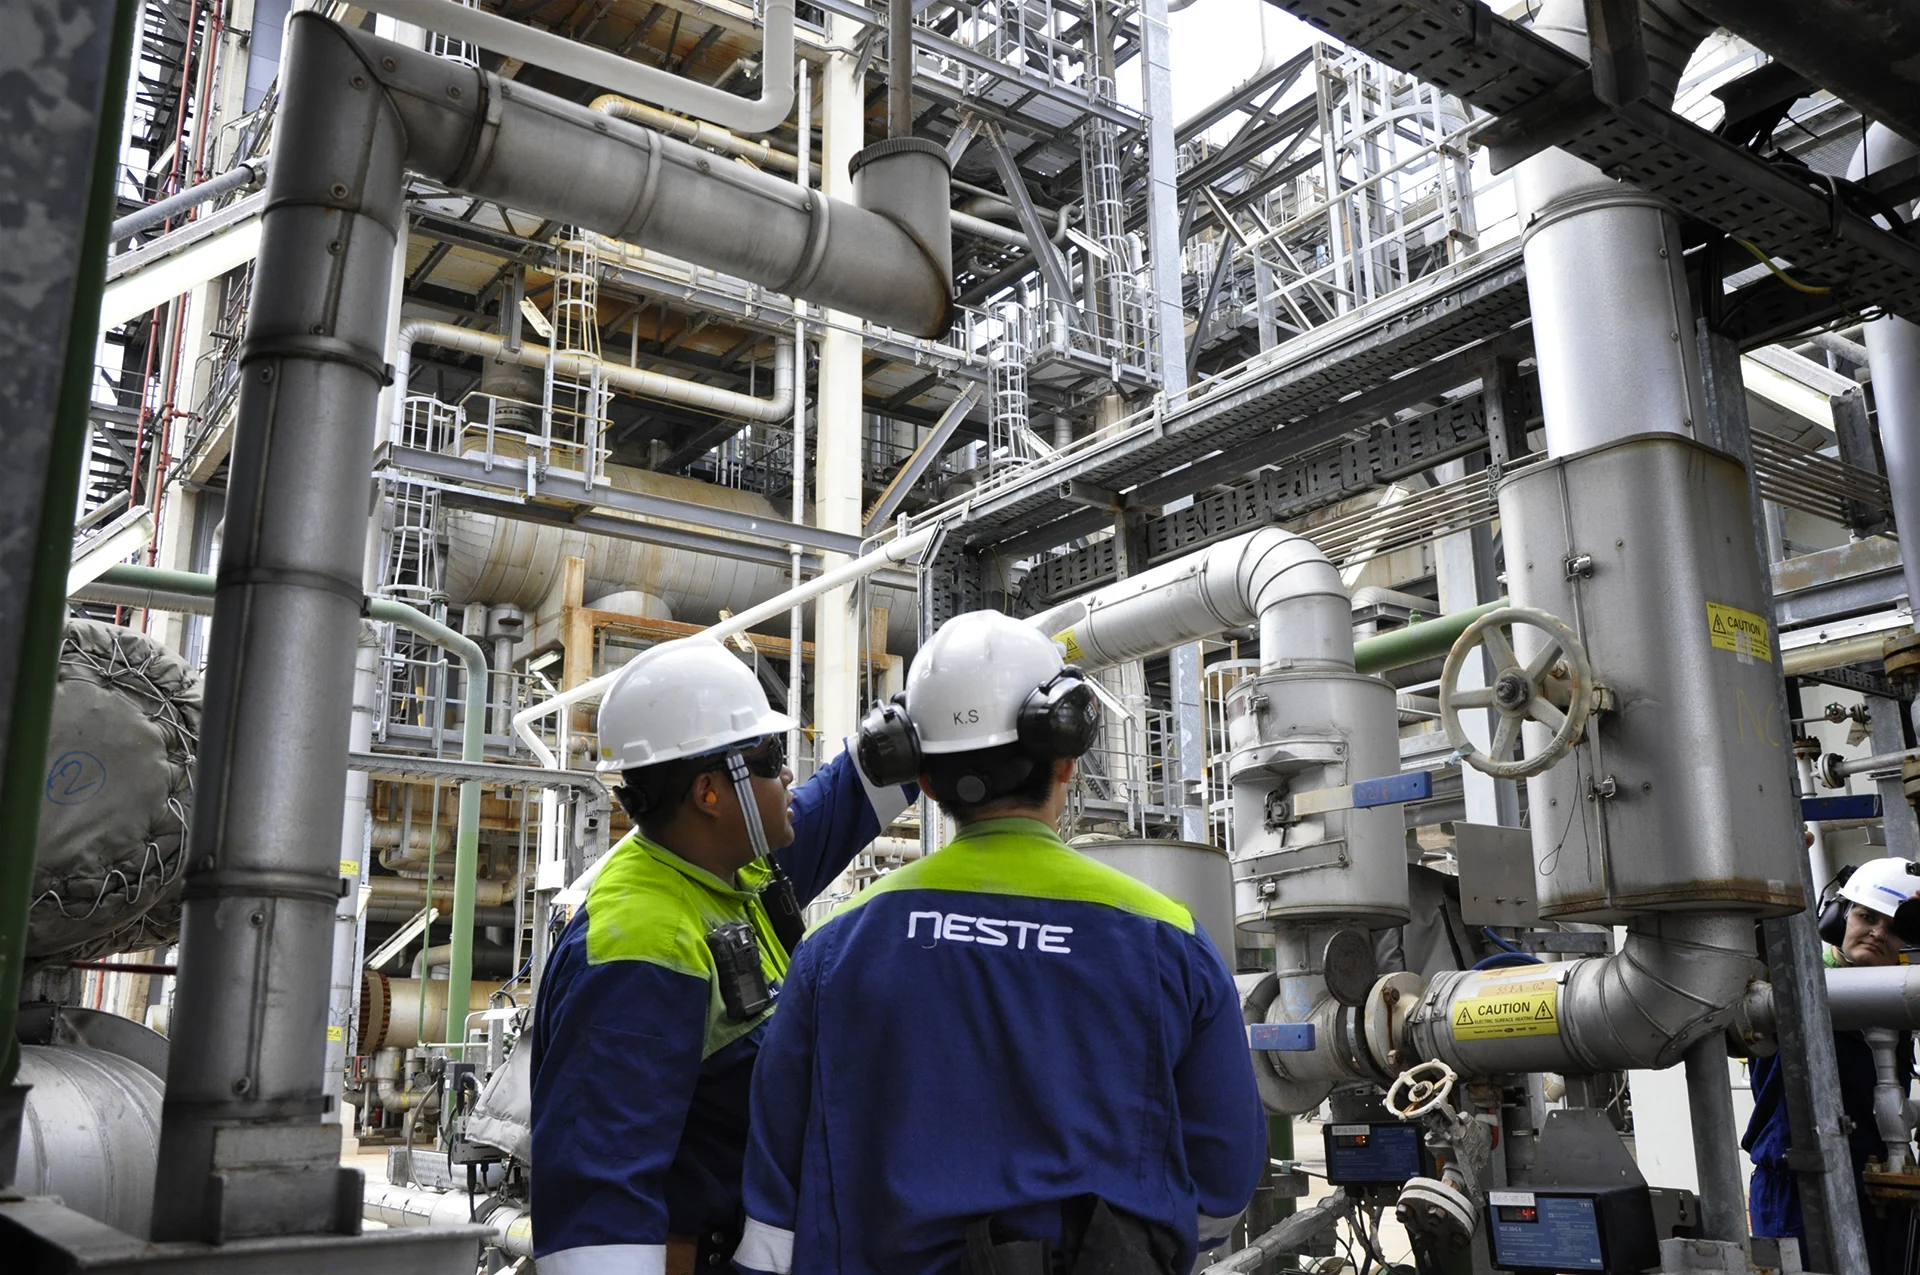 Singapore refinery employees